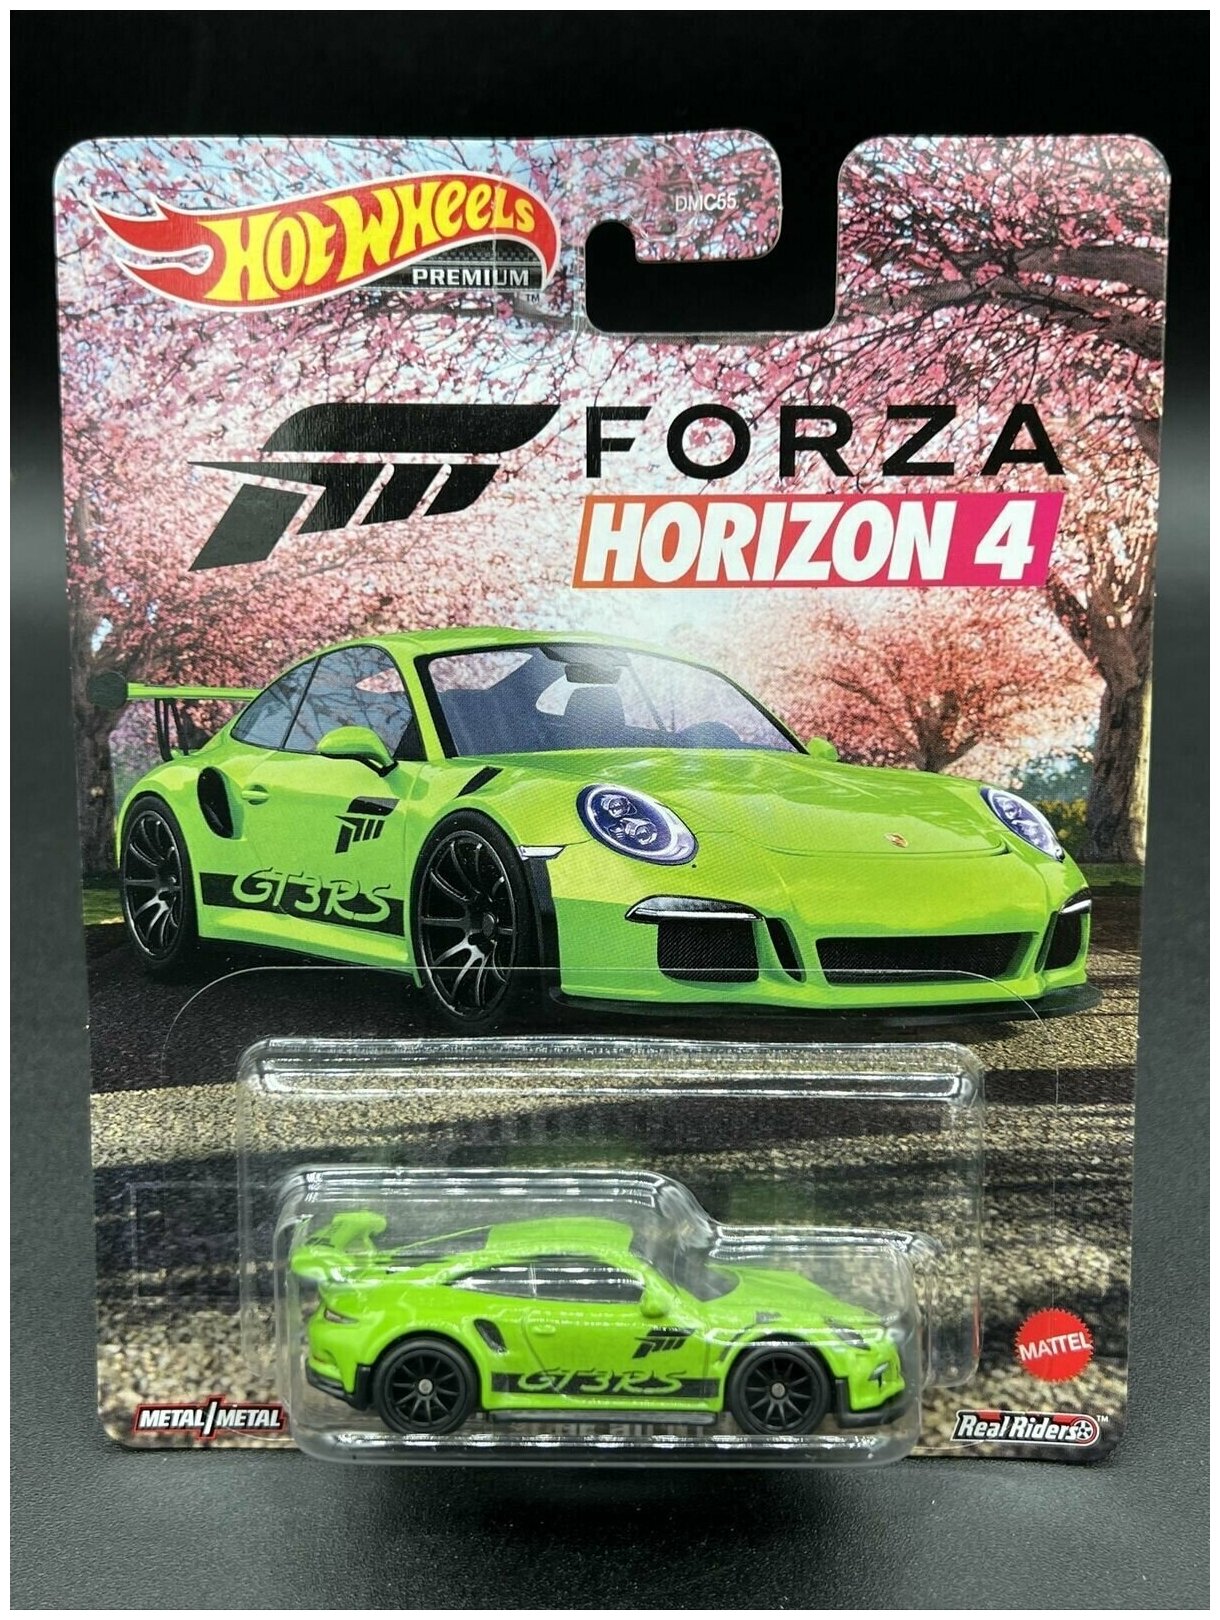 Hot Wheels Premium Porsche 911 GT3 RS Forza Horizon 4 редкая коллекционная модель из сета RETRO ENTARTAINMENT